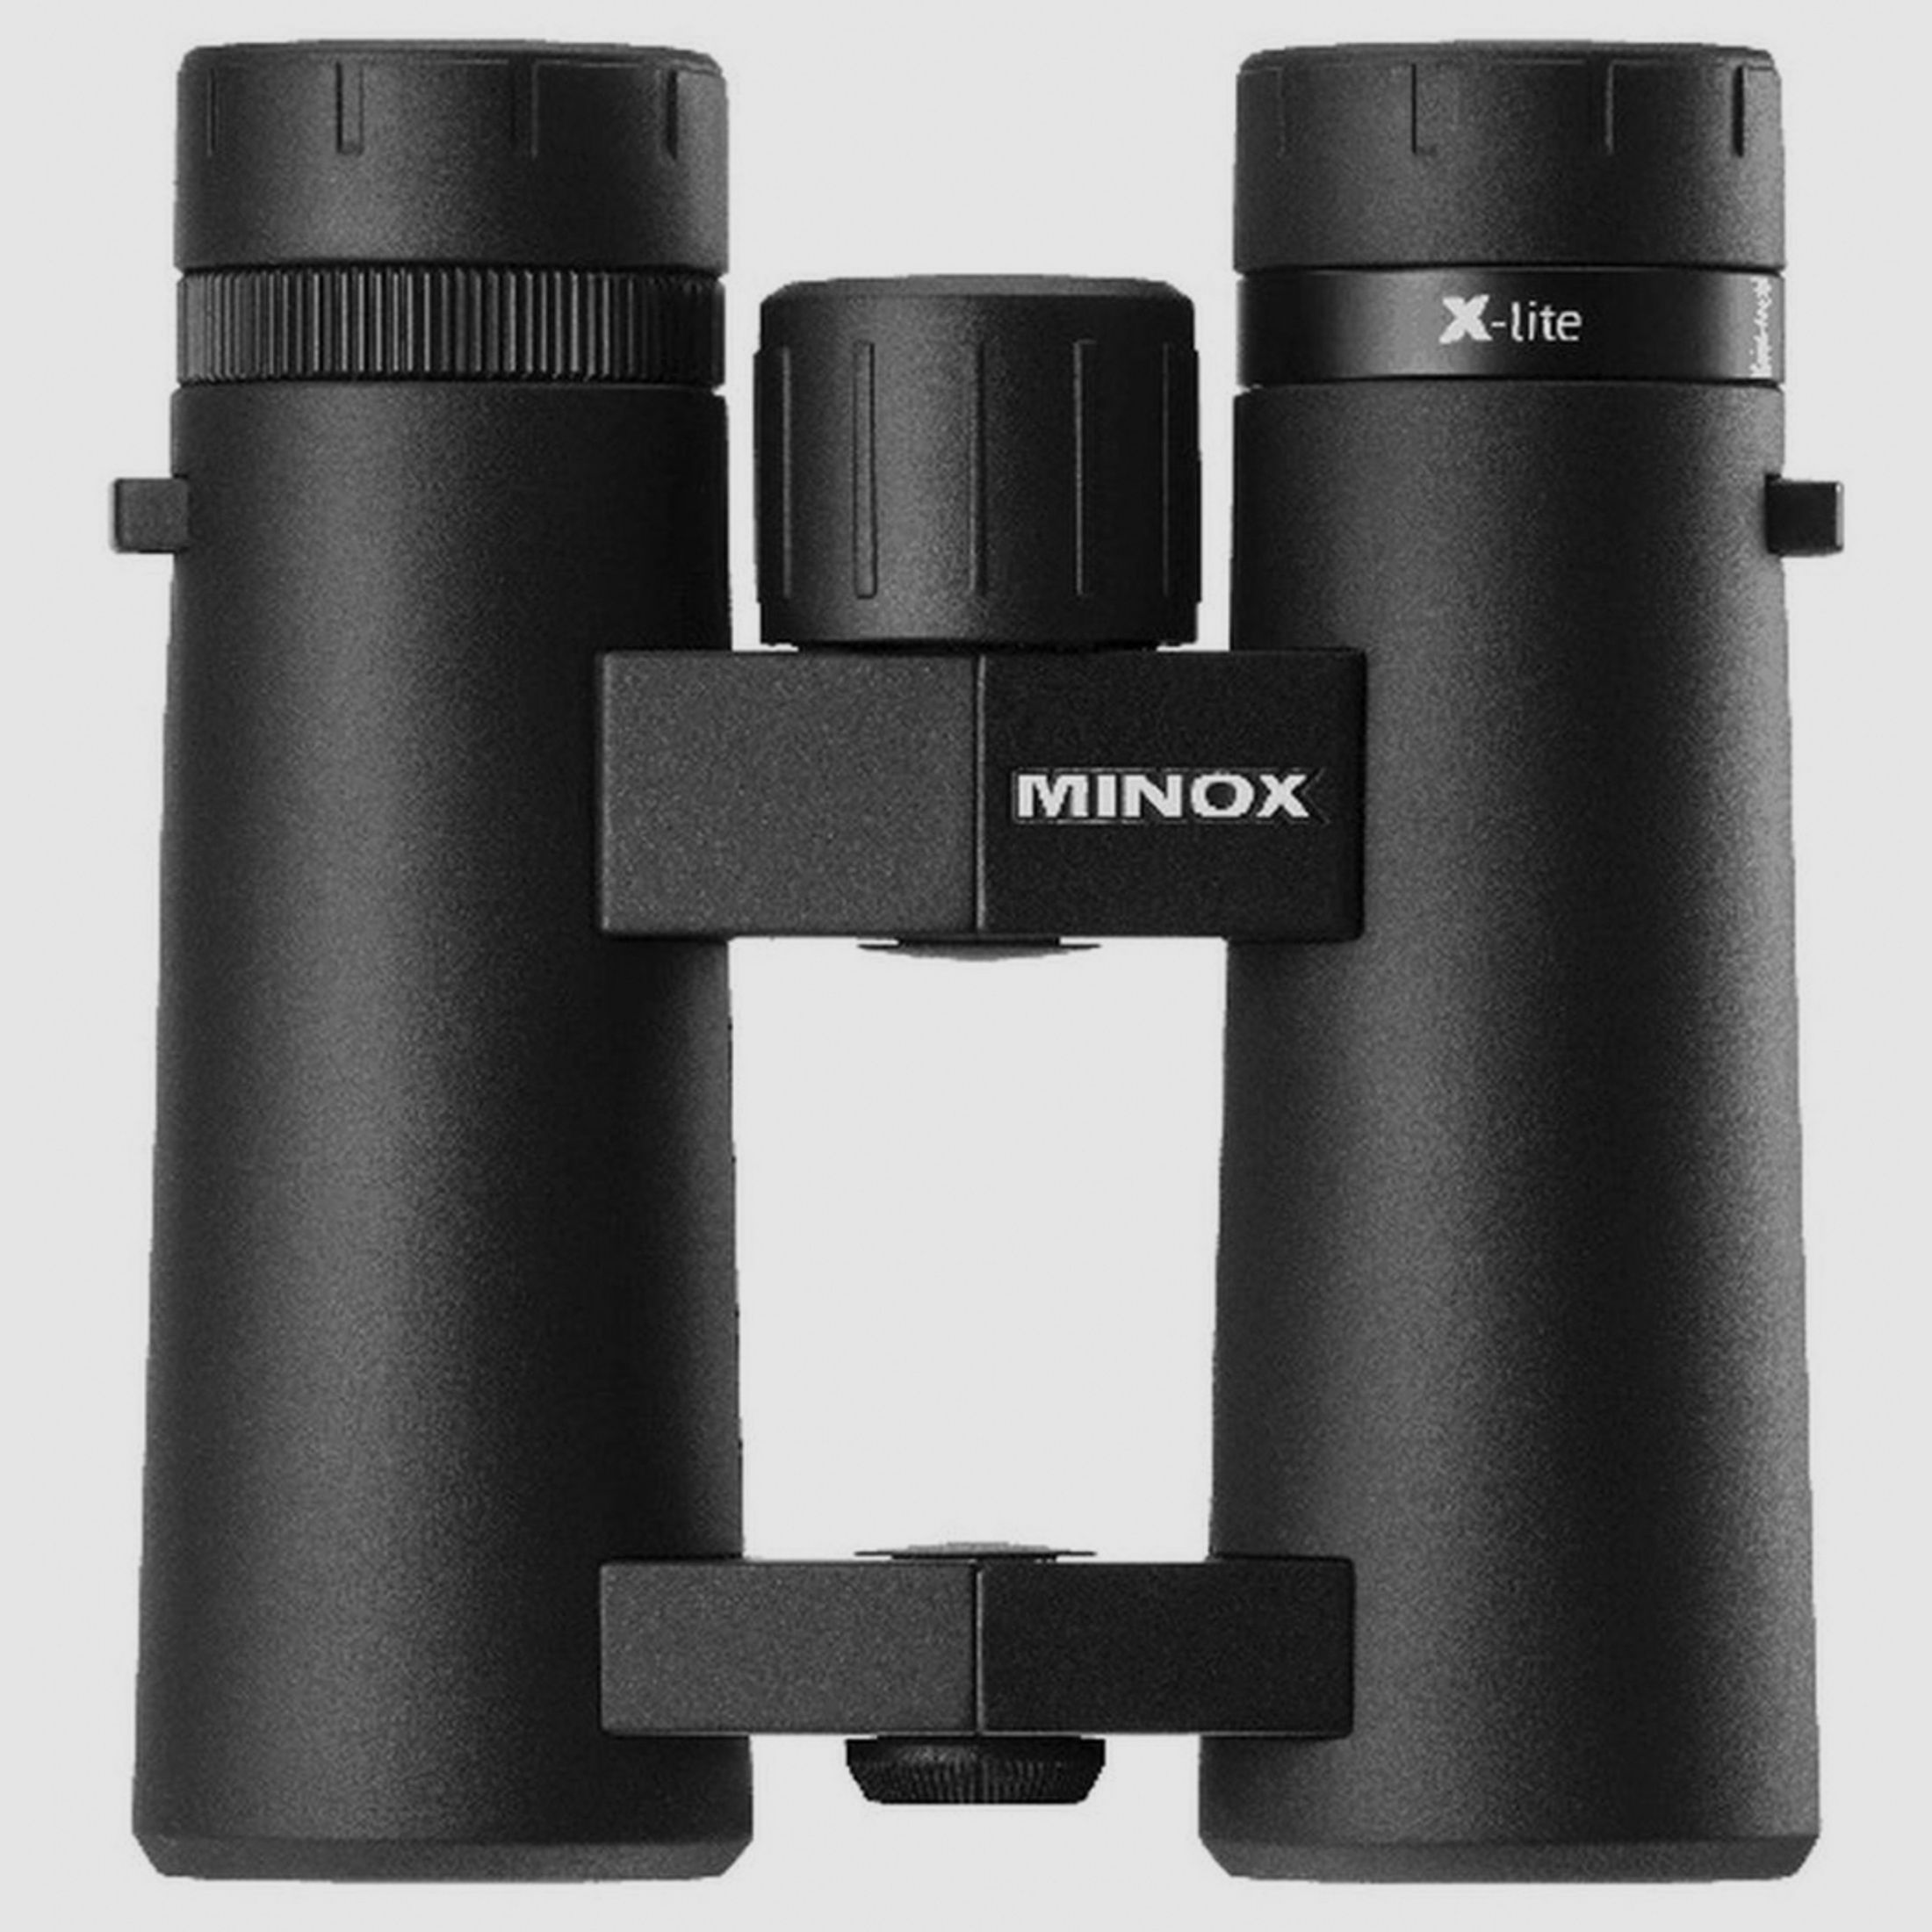 Minox Minox X-lite 8x26 -10,90€ 10% Fernglas Rabatt 98,10 Effektivpreis